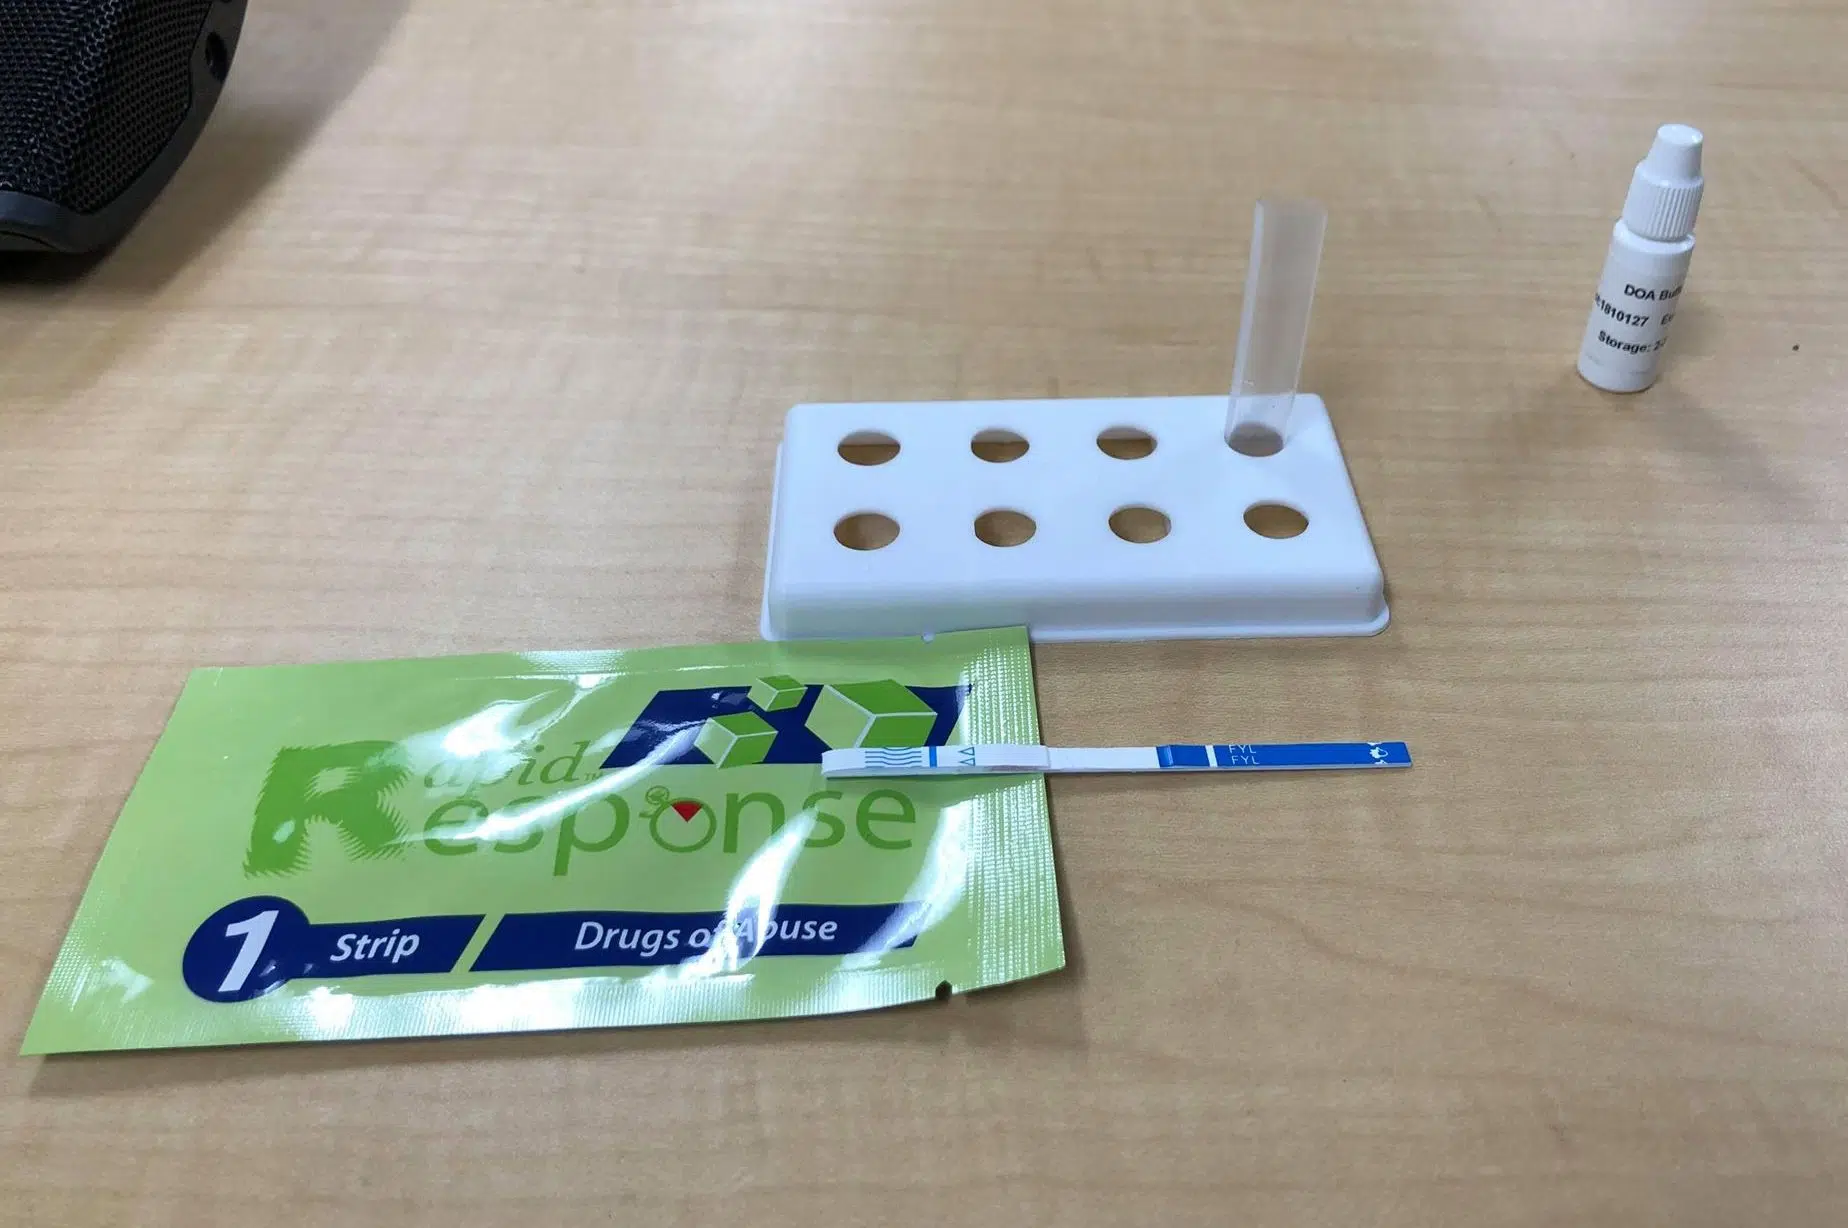 Saskatoon students plan to offer free fentanyl testing kits